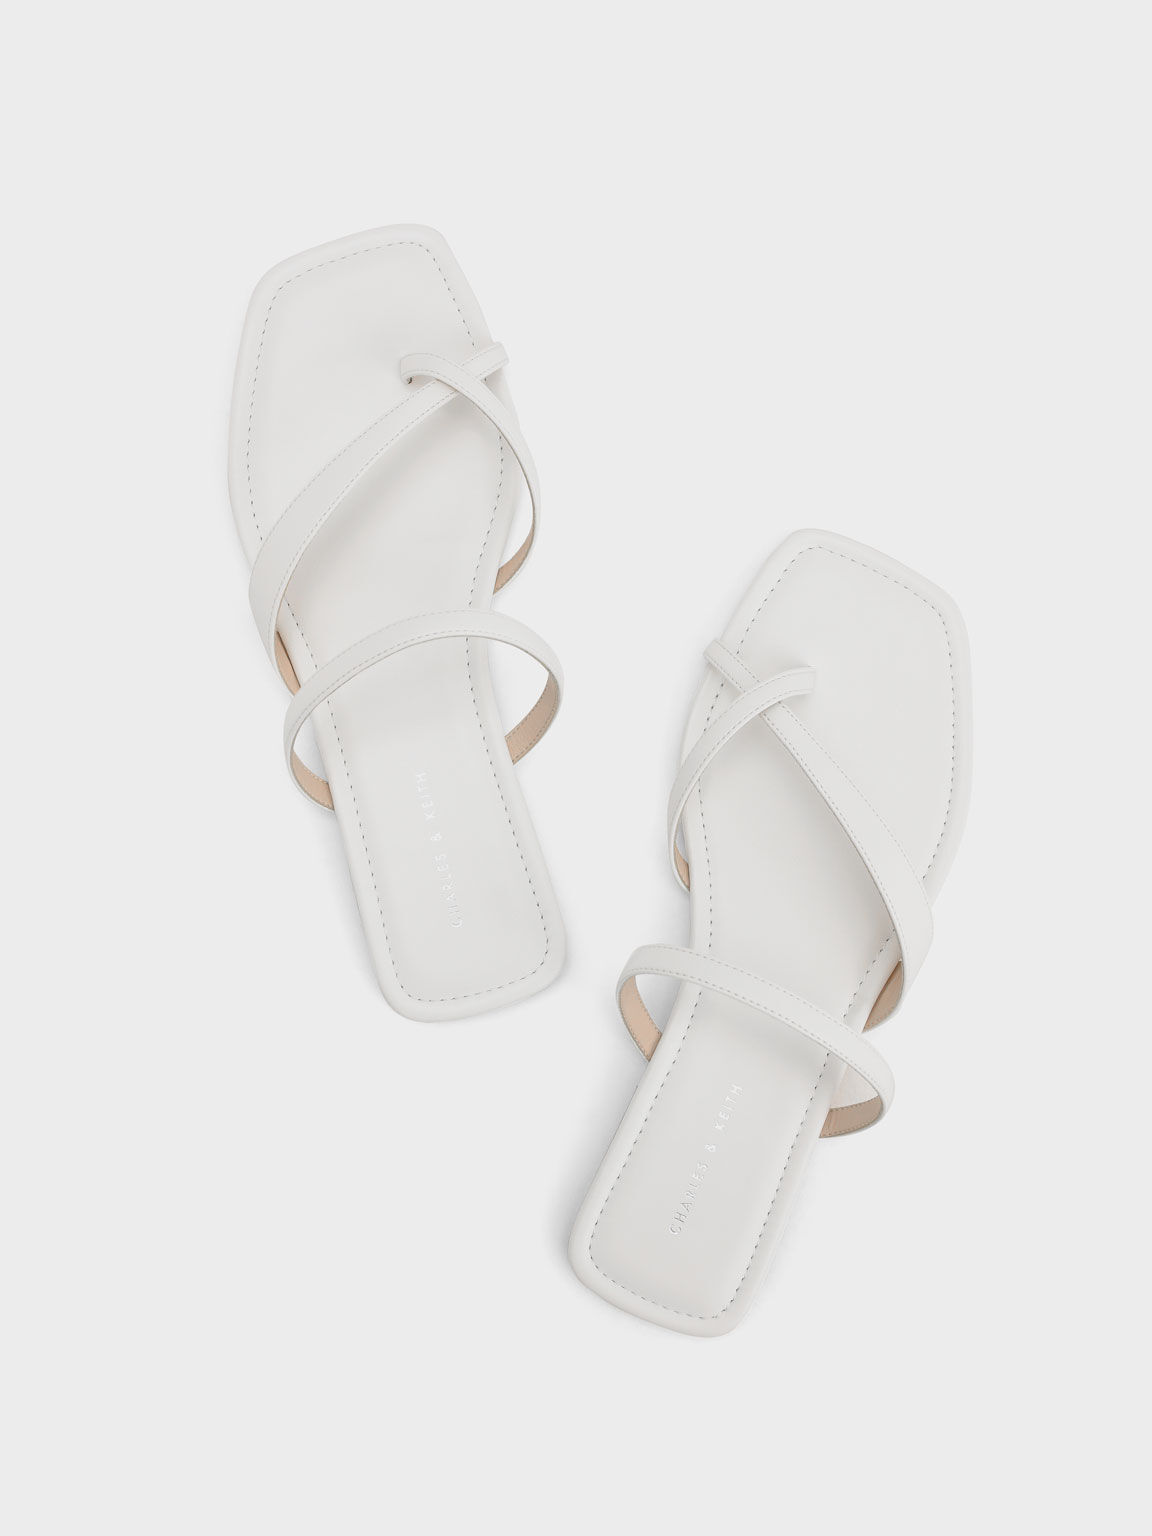 Toe-Loop Slide Sandals, White, hi-res